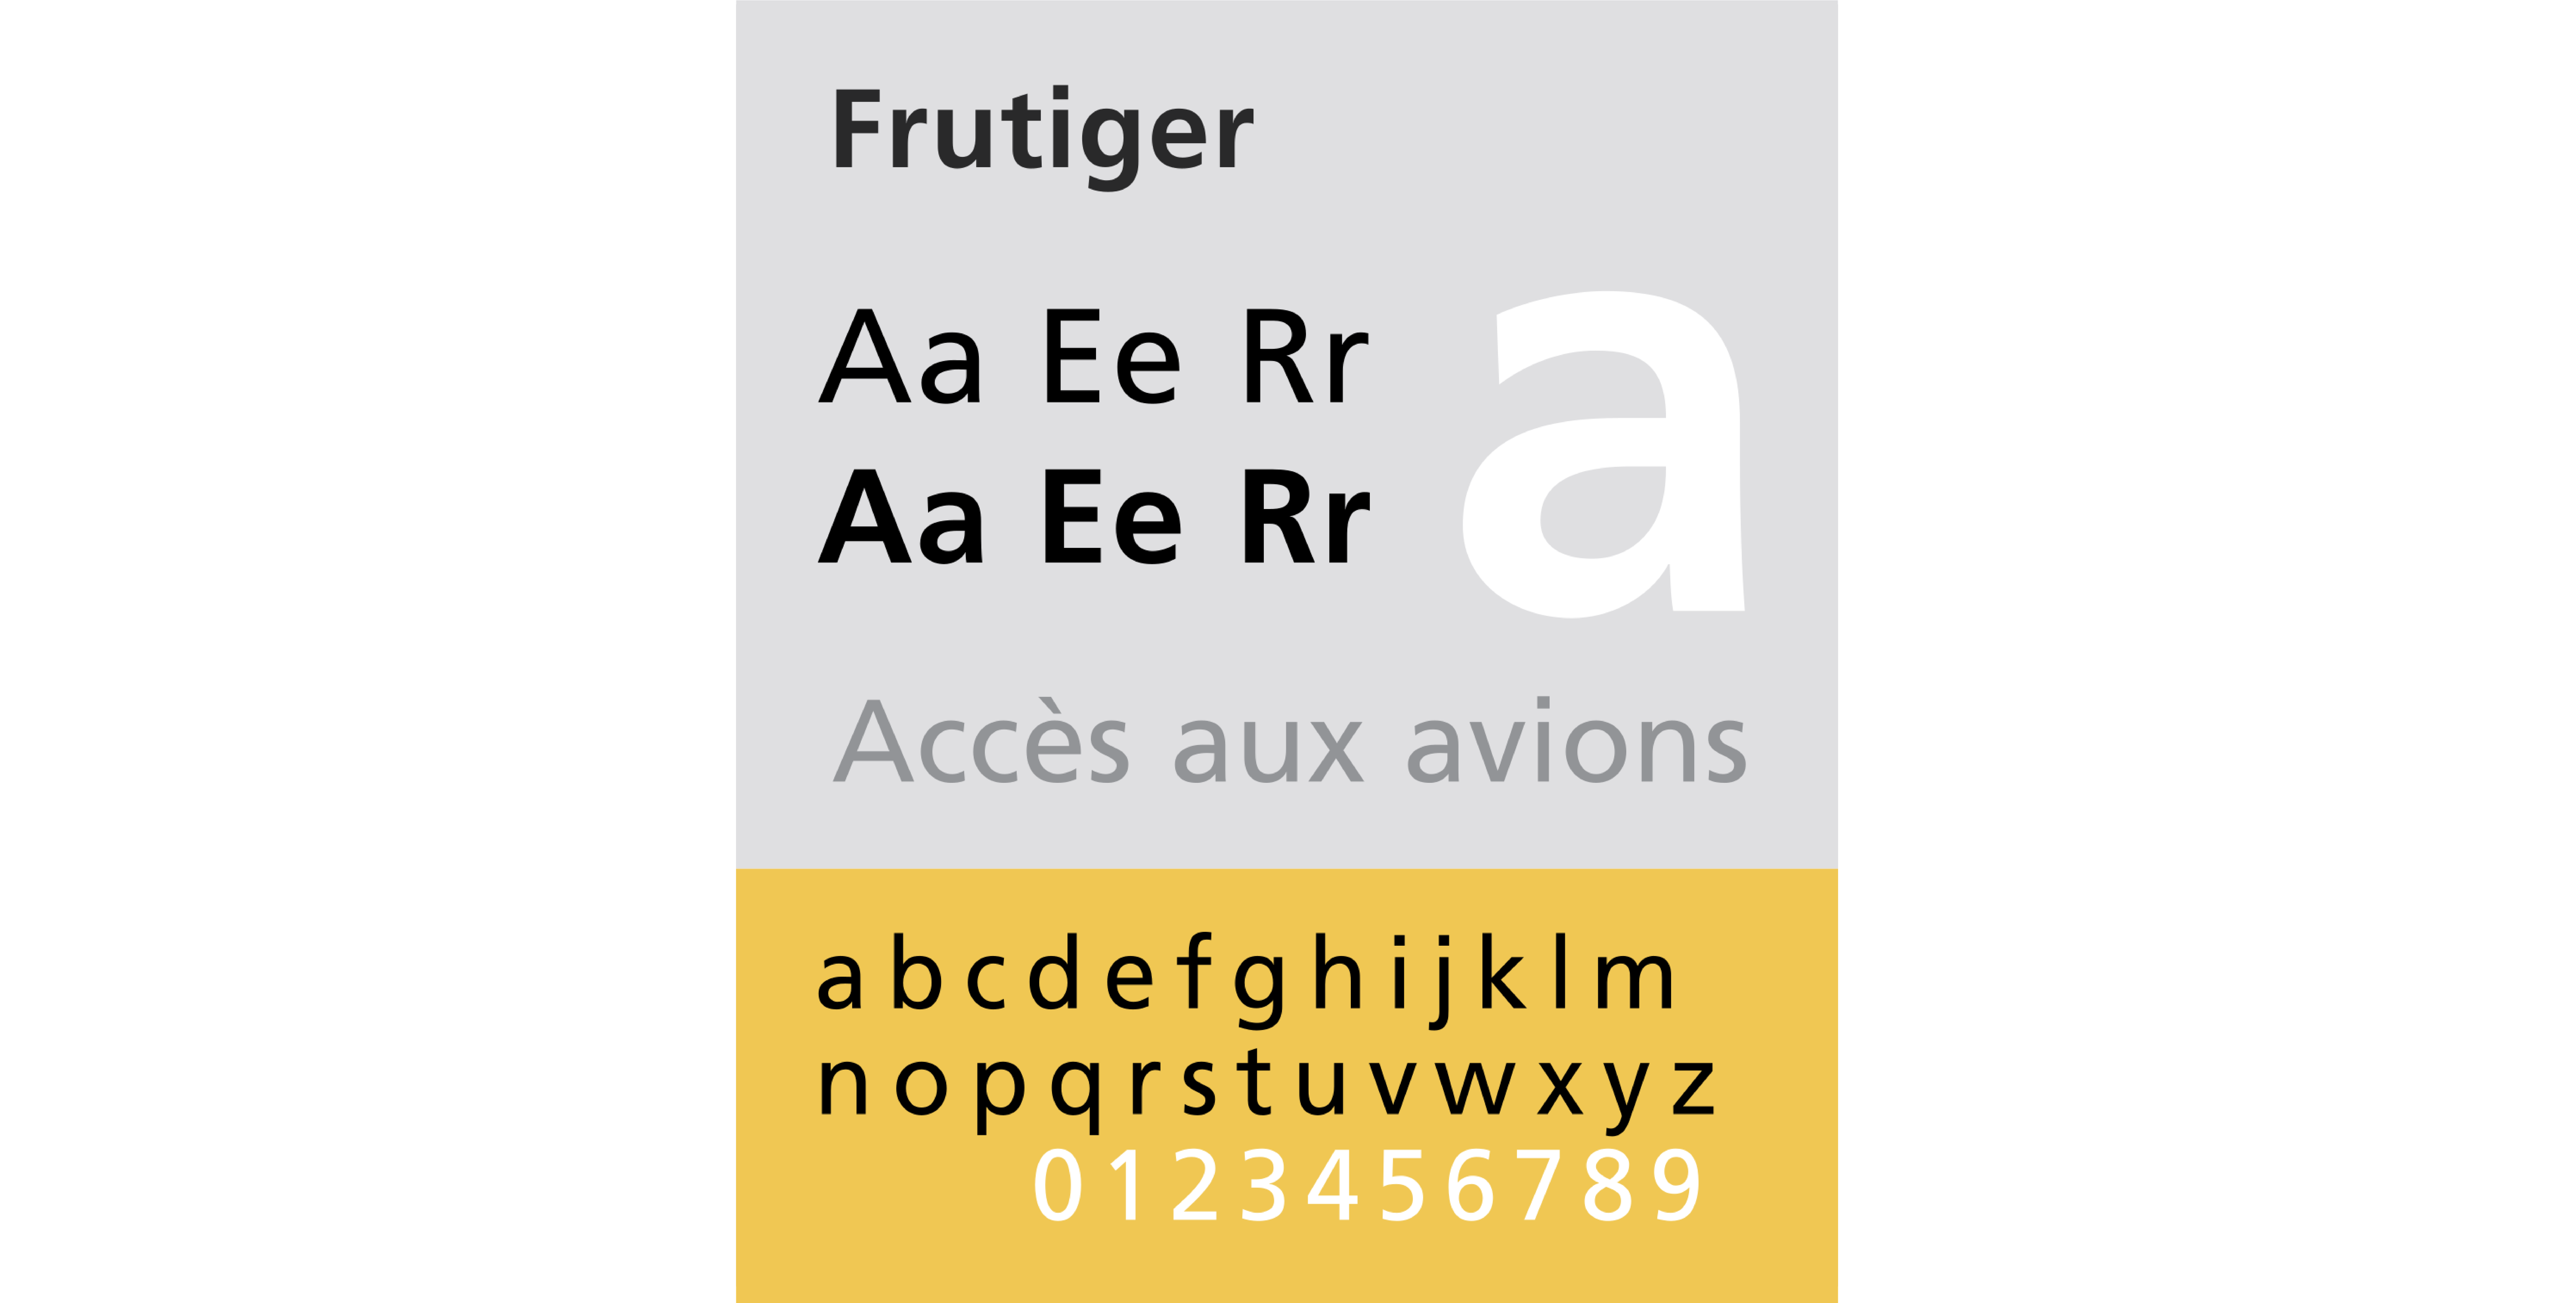 The Frutiger Typeface. 